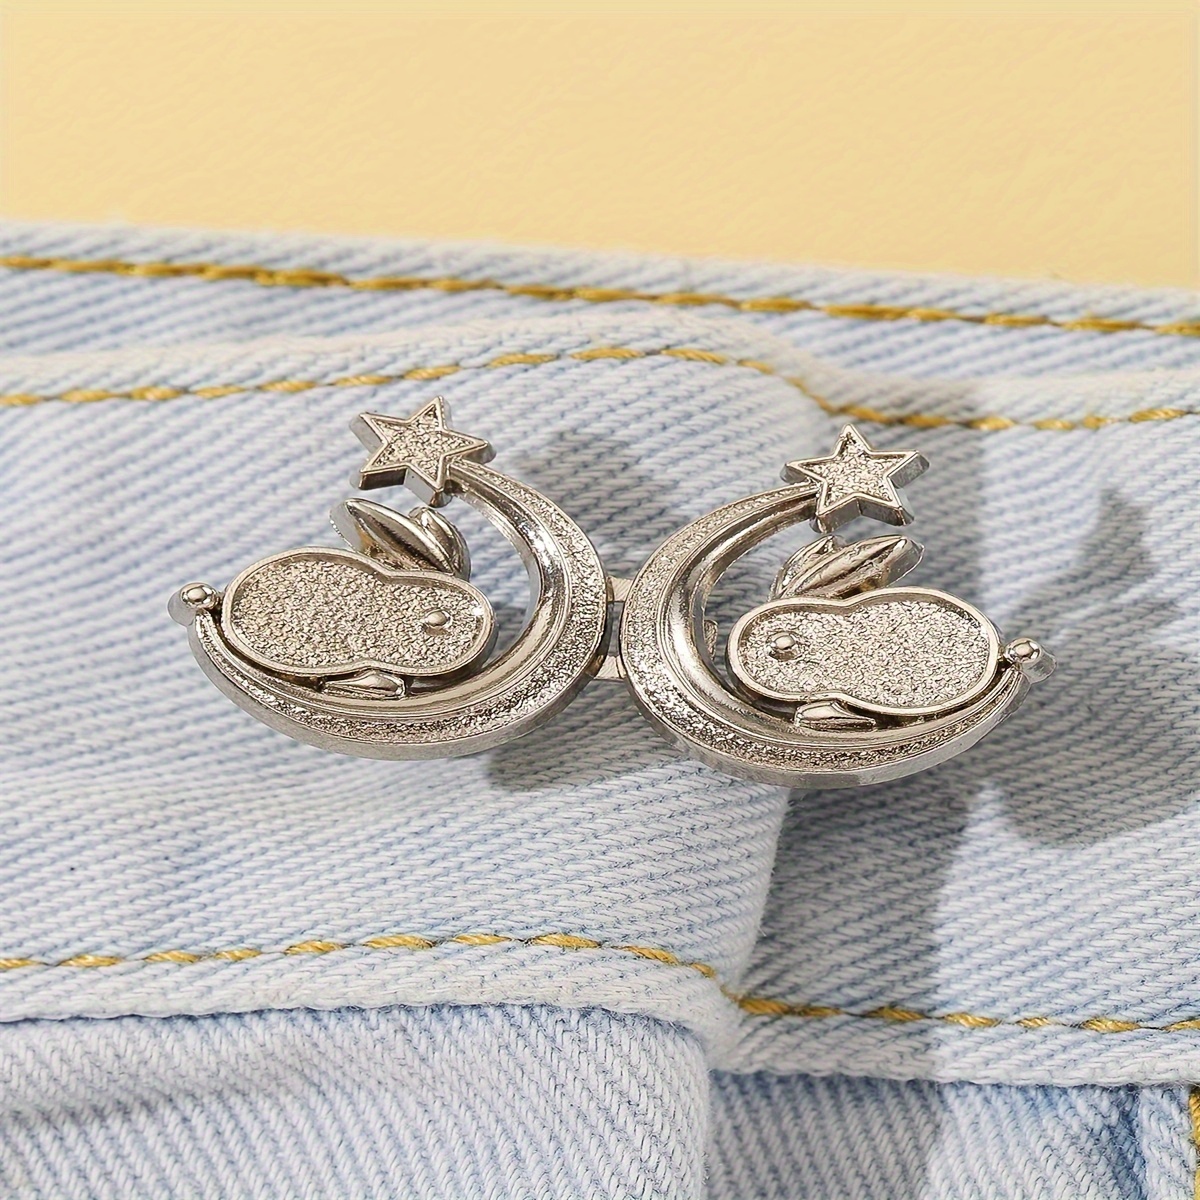 1 Pair Rabbit Moon Buckle Pant Waist Tightener Detachable Waist Buttons  Pins Belts Accessories Pants Clips No Sewing Waistband Tightener